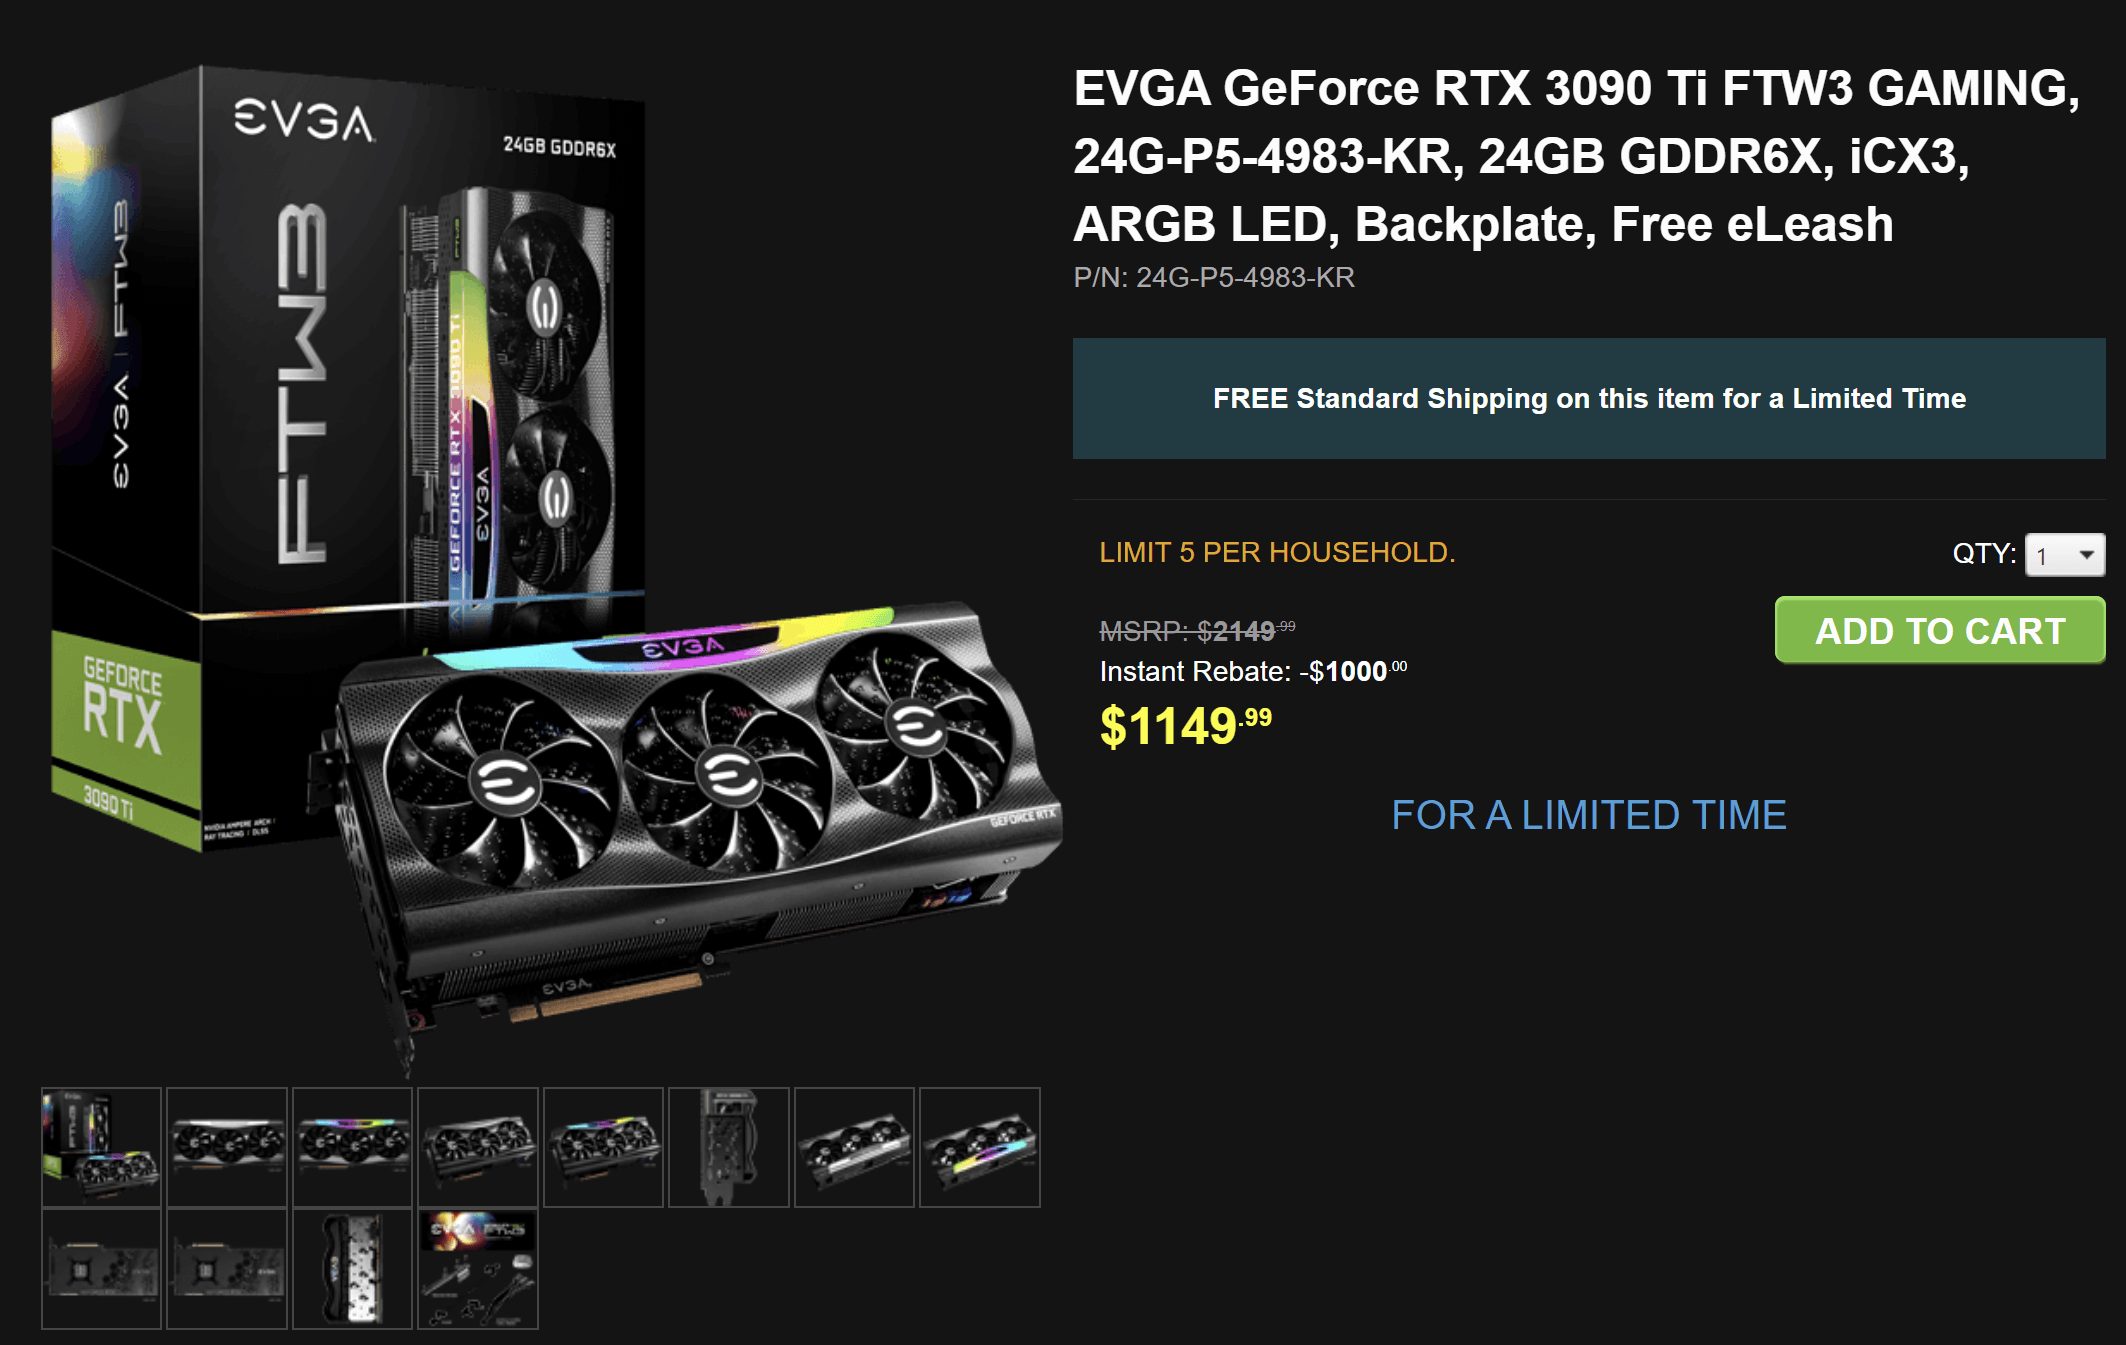 EVGA - Articles - EVGA GeForce RTX 20-Series